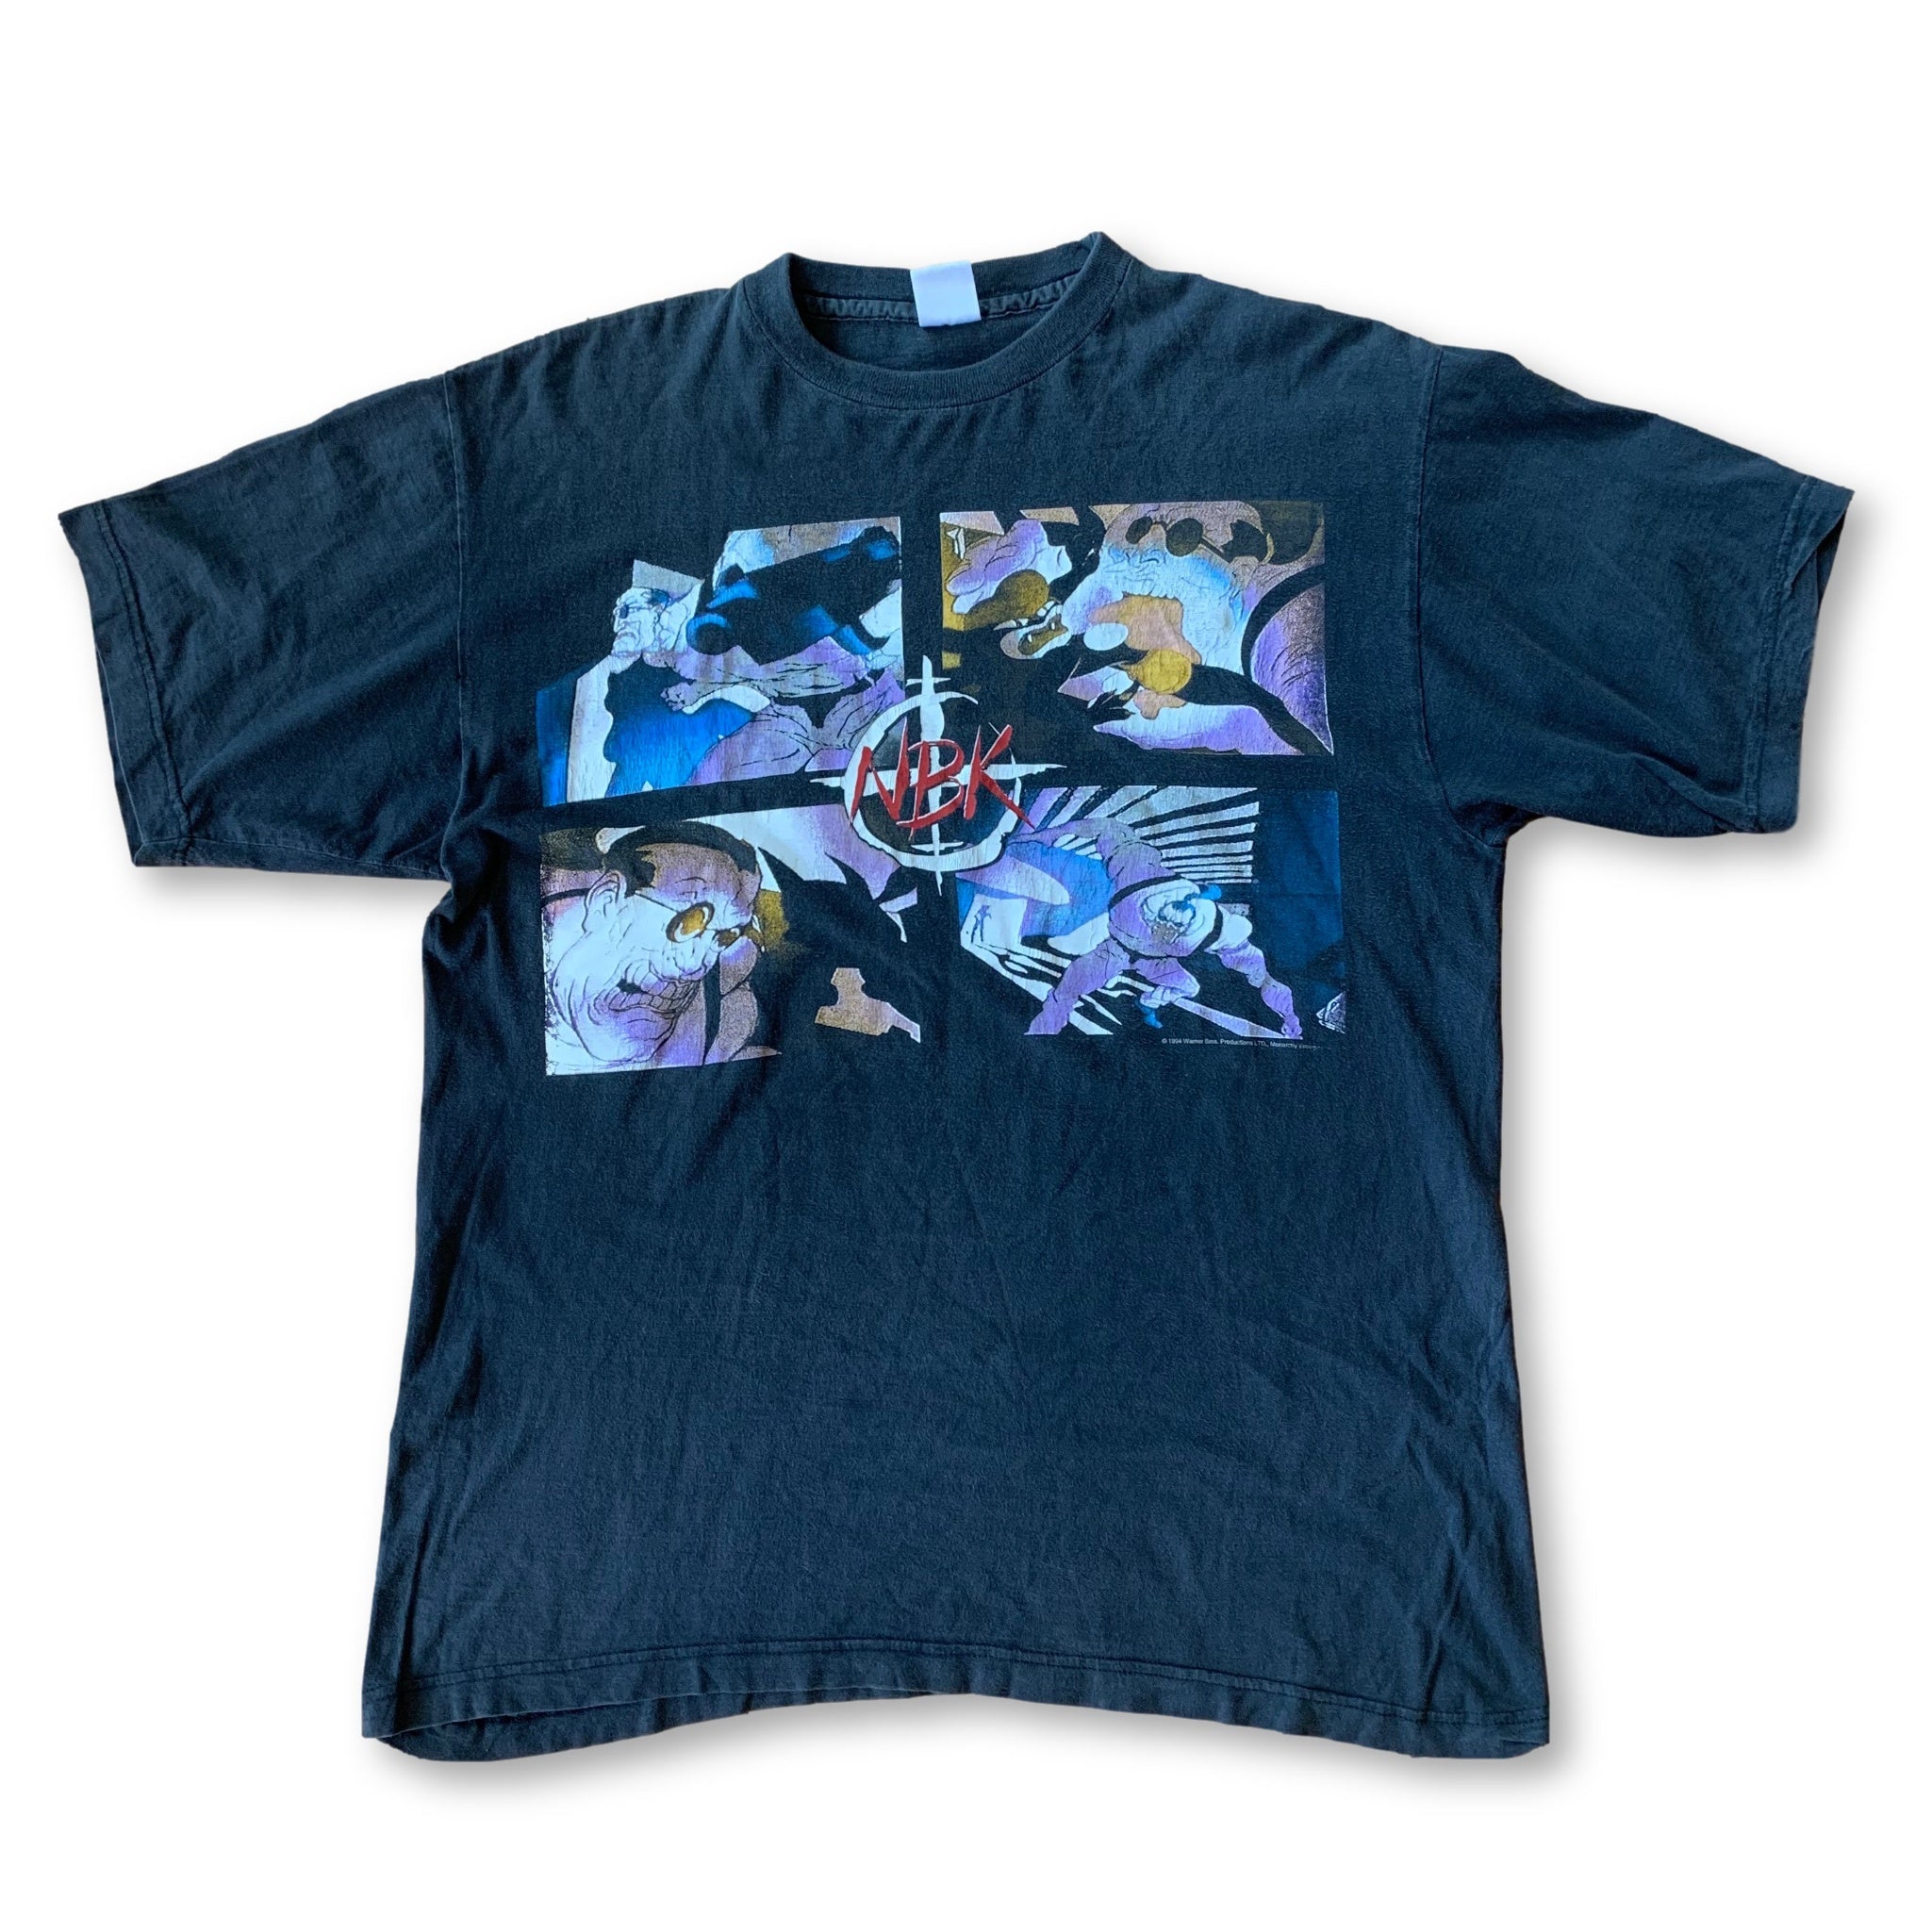 Vintage 1994 Natural Born Killers Promo T-Shirt - XL